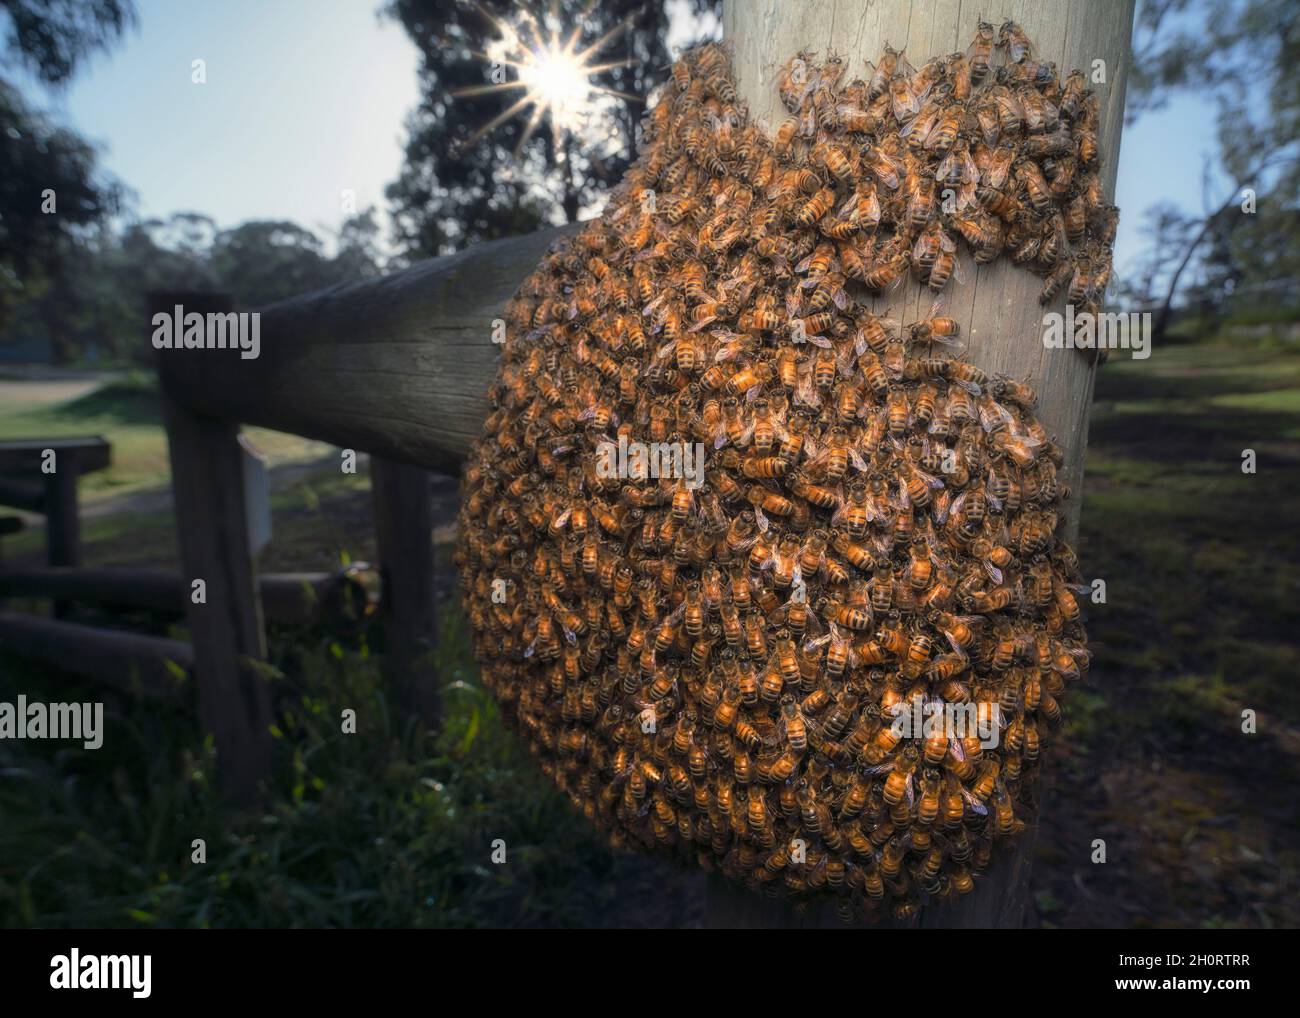 Invasive European honey bee swarm on a wooden post, Melbourne, Victoria, Australia Stock Photo